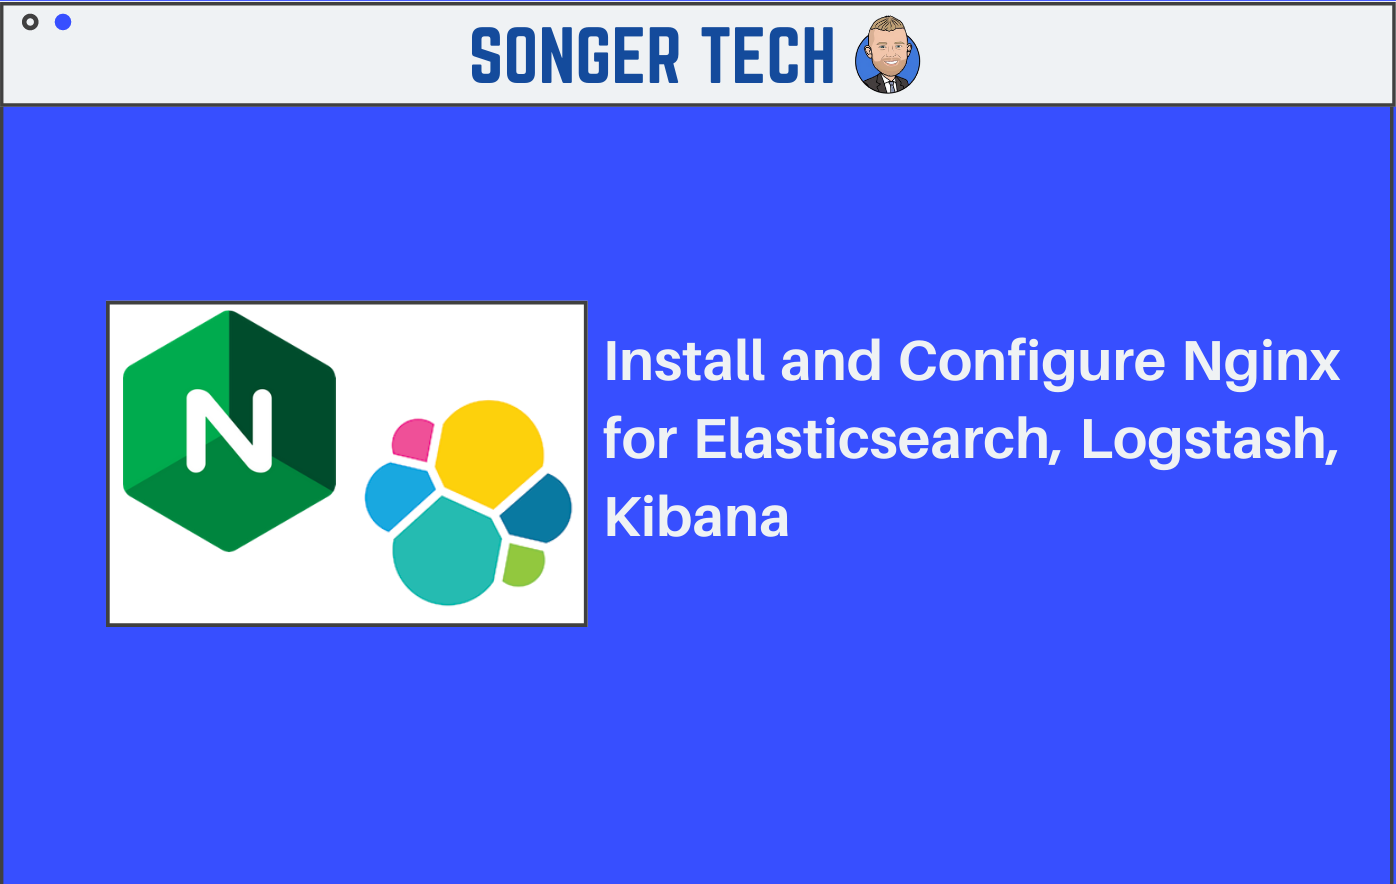 Install and Configure Nginx for Elasticsearch, Logstash, Kibana